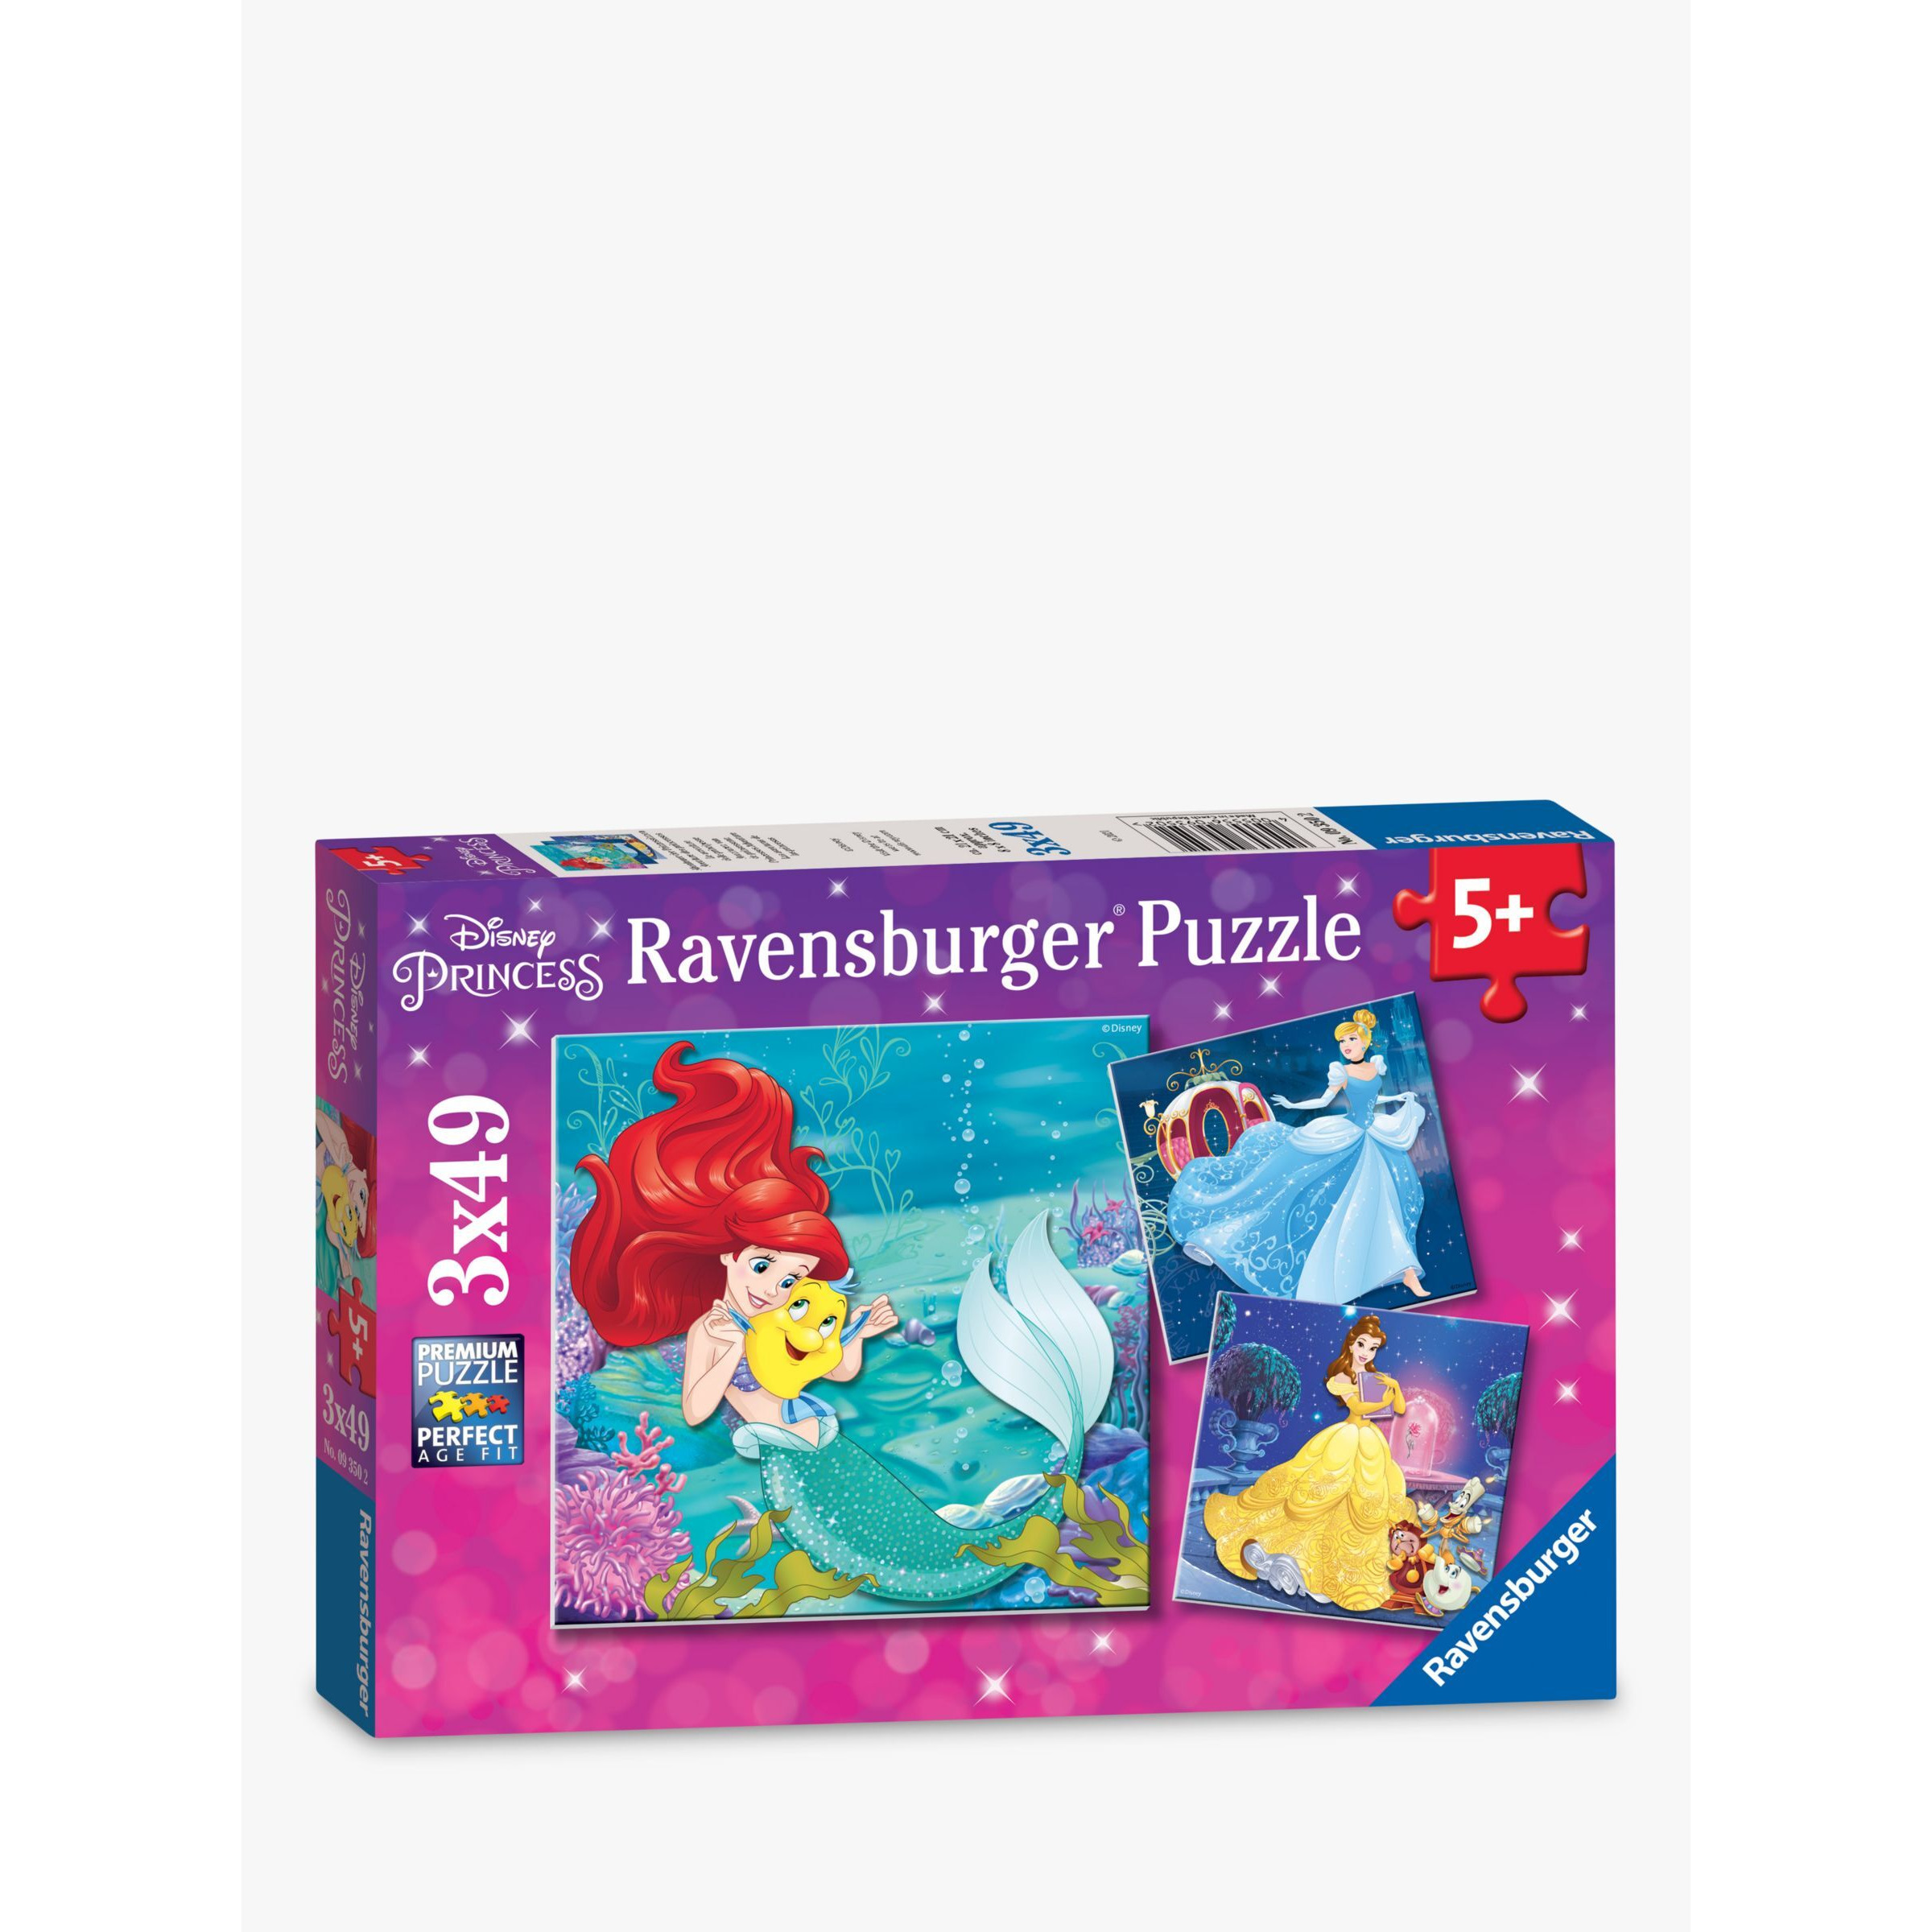 Ravensburger Disney Princess Jigsaw Puzzles, Box of 3 - image 1